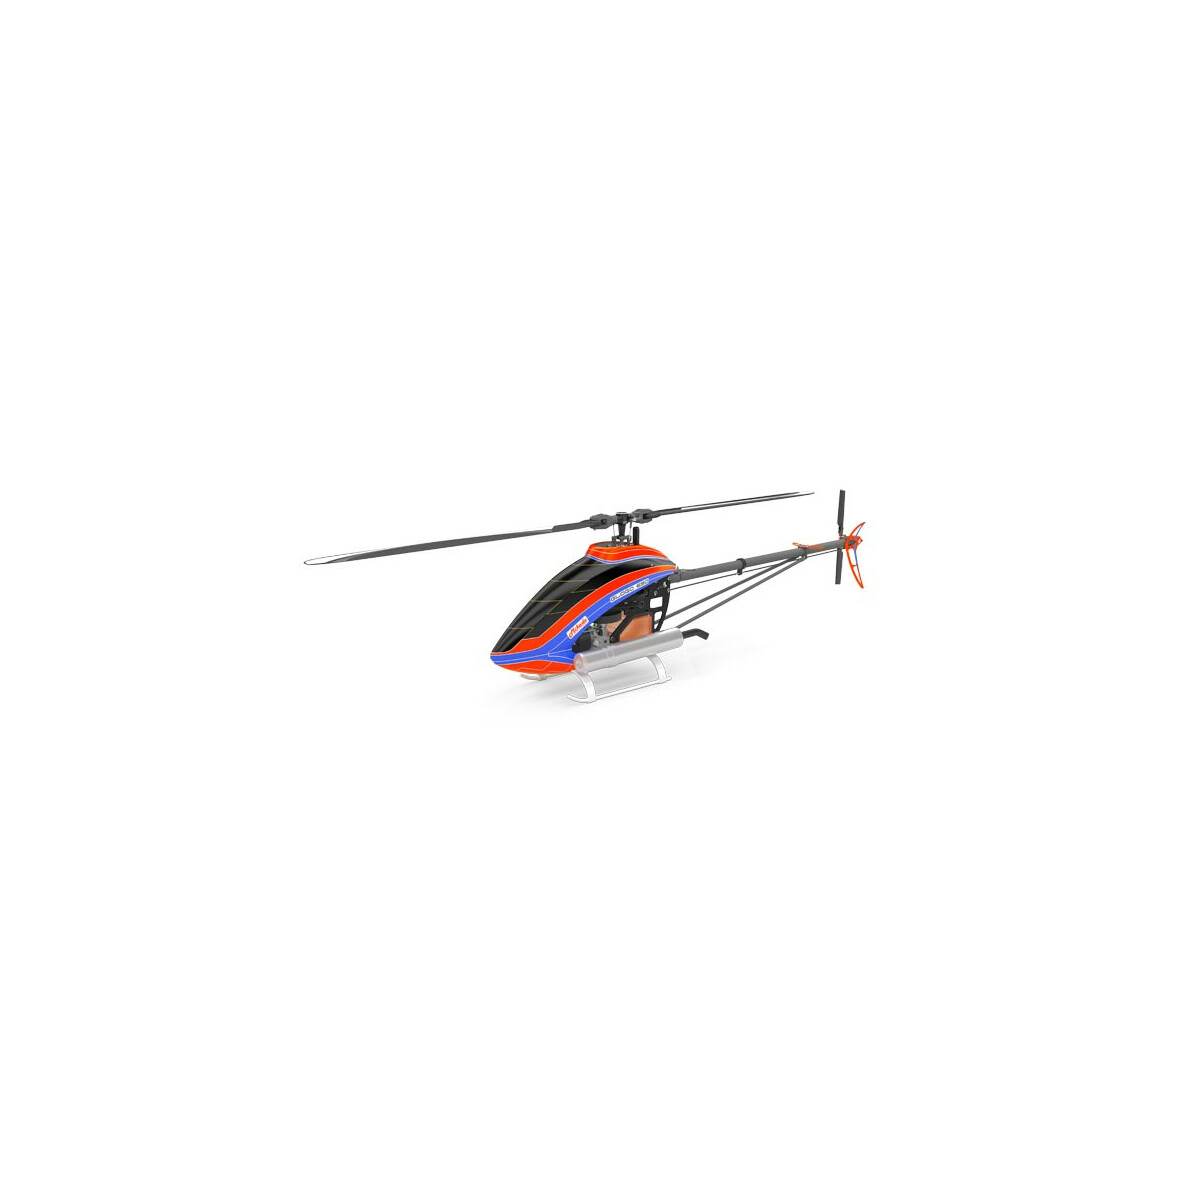 GLOGO 690 SX Helicopter Kit - RT-690